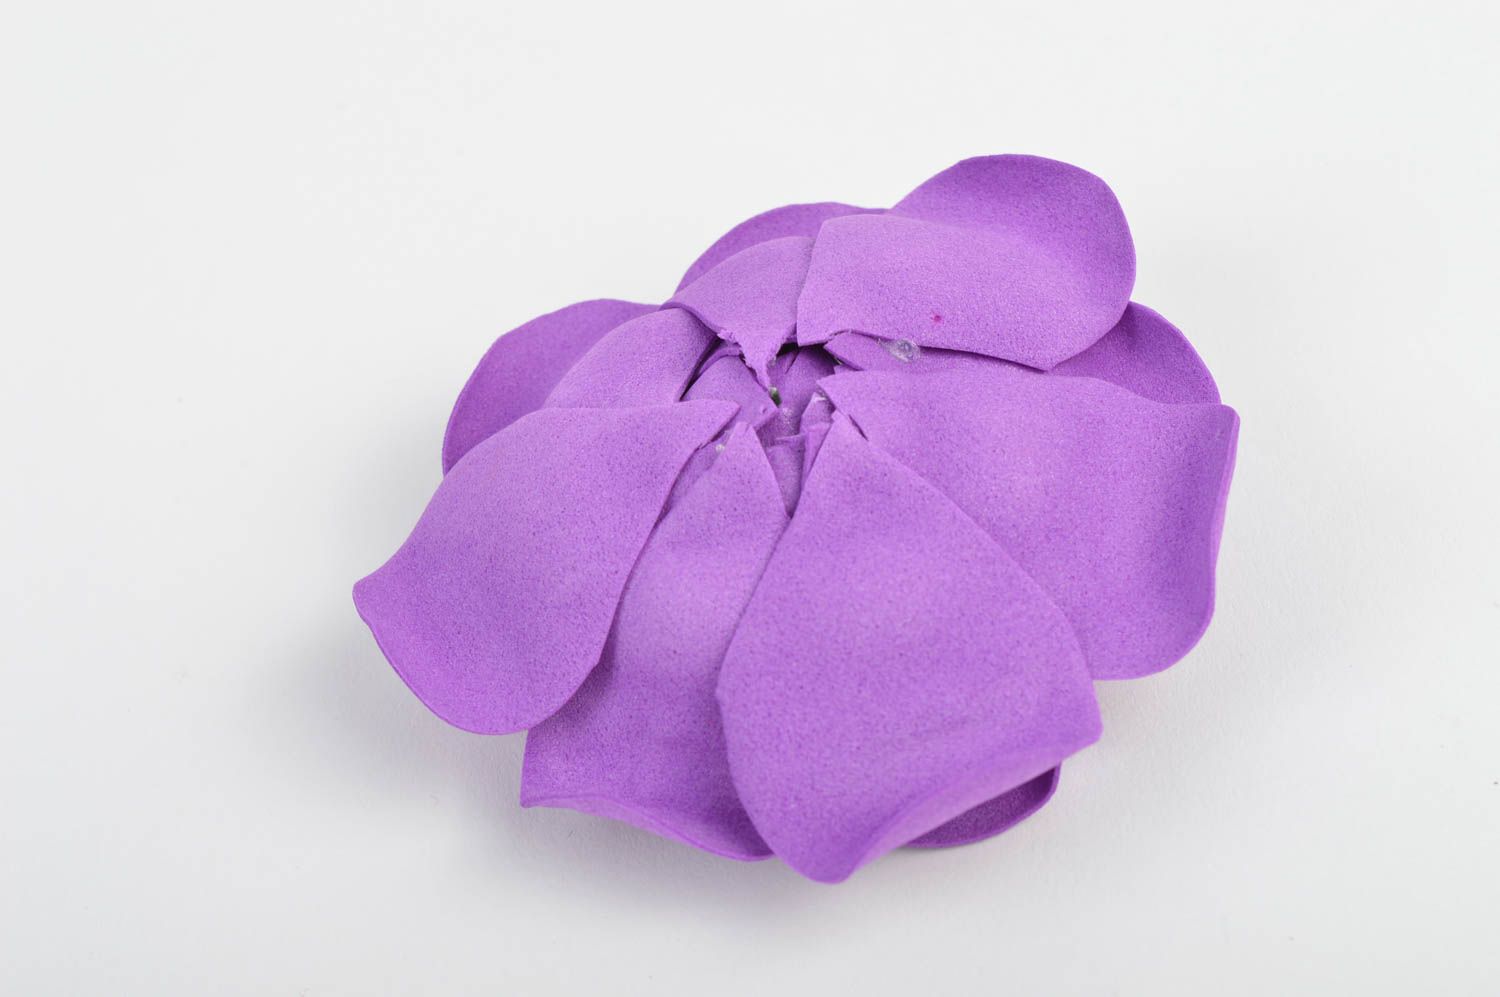 Handmade blank for creativity designer flower blank for brooch jewelry ideas photo 4